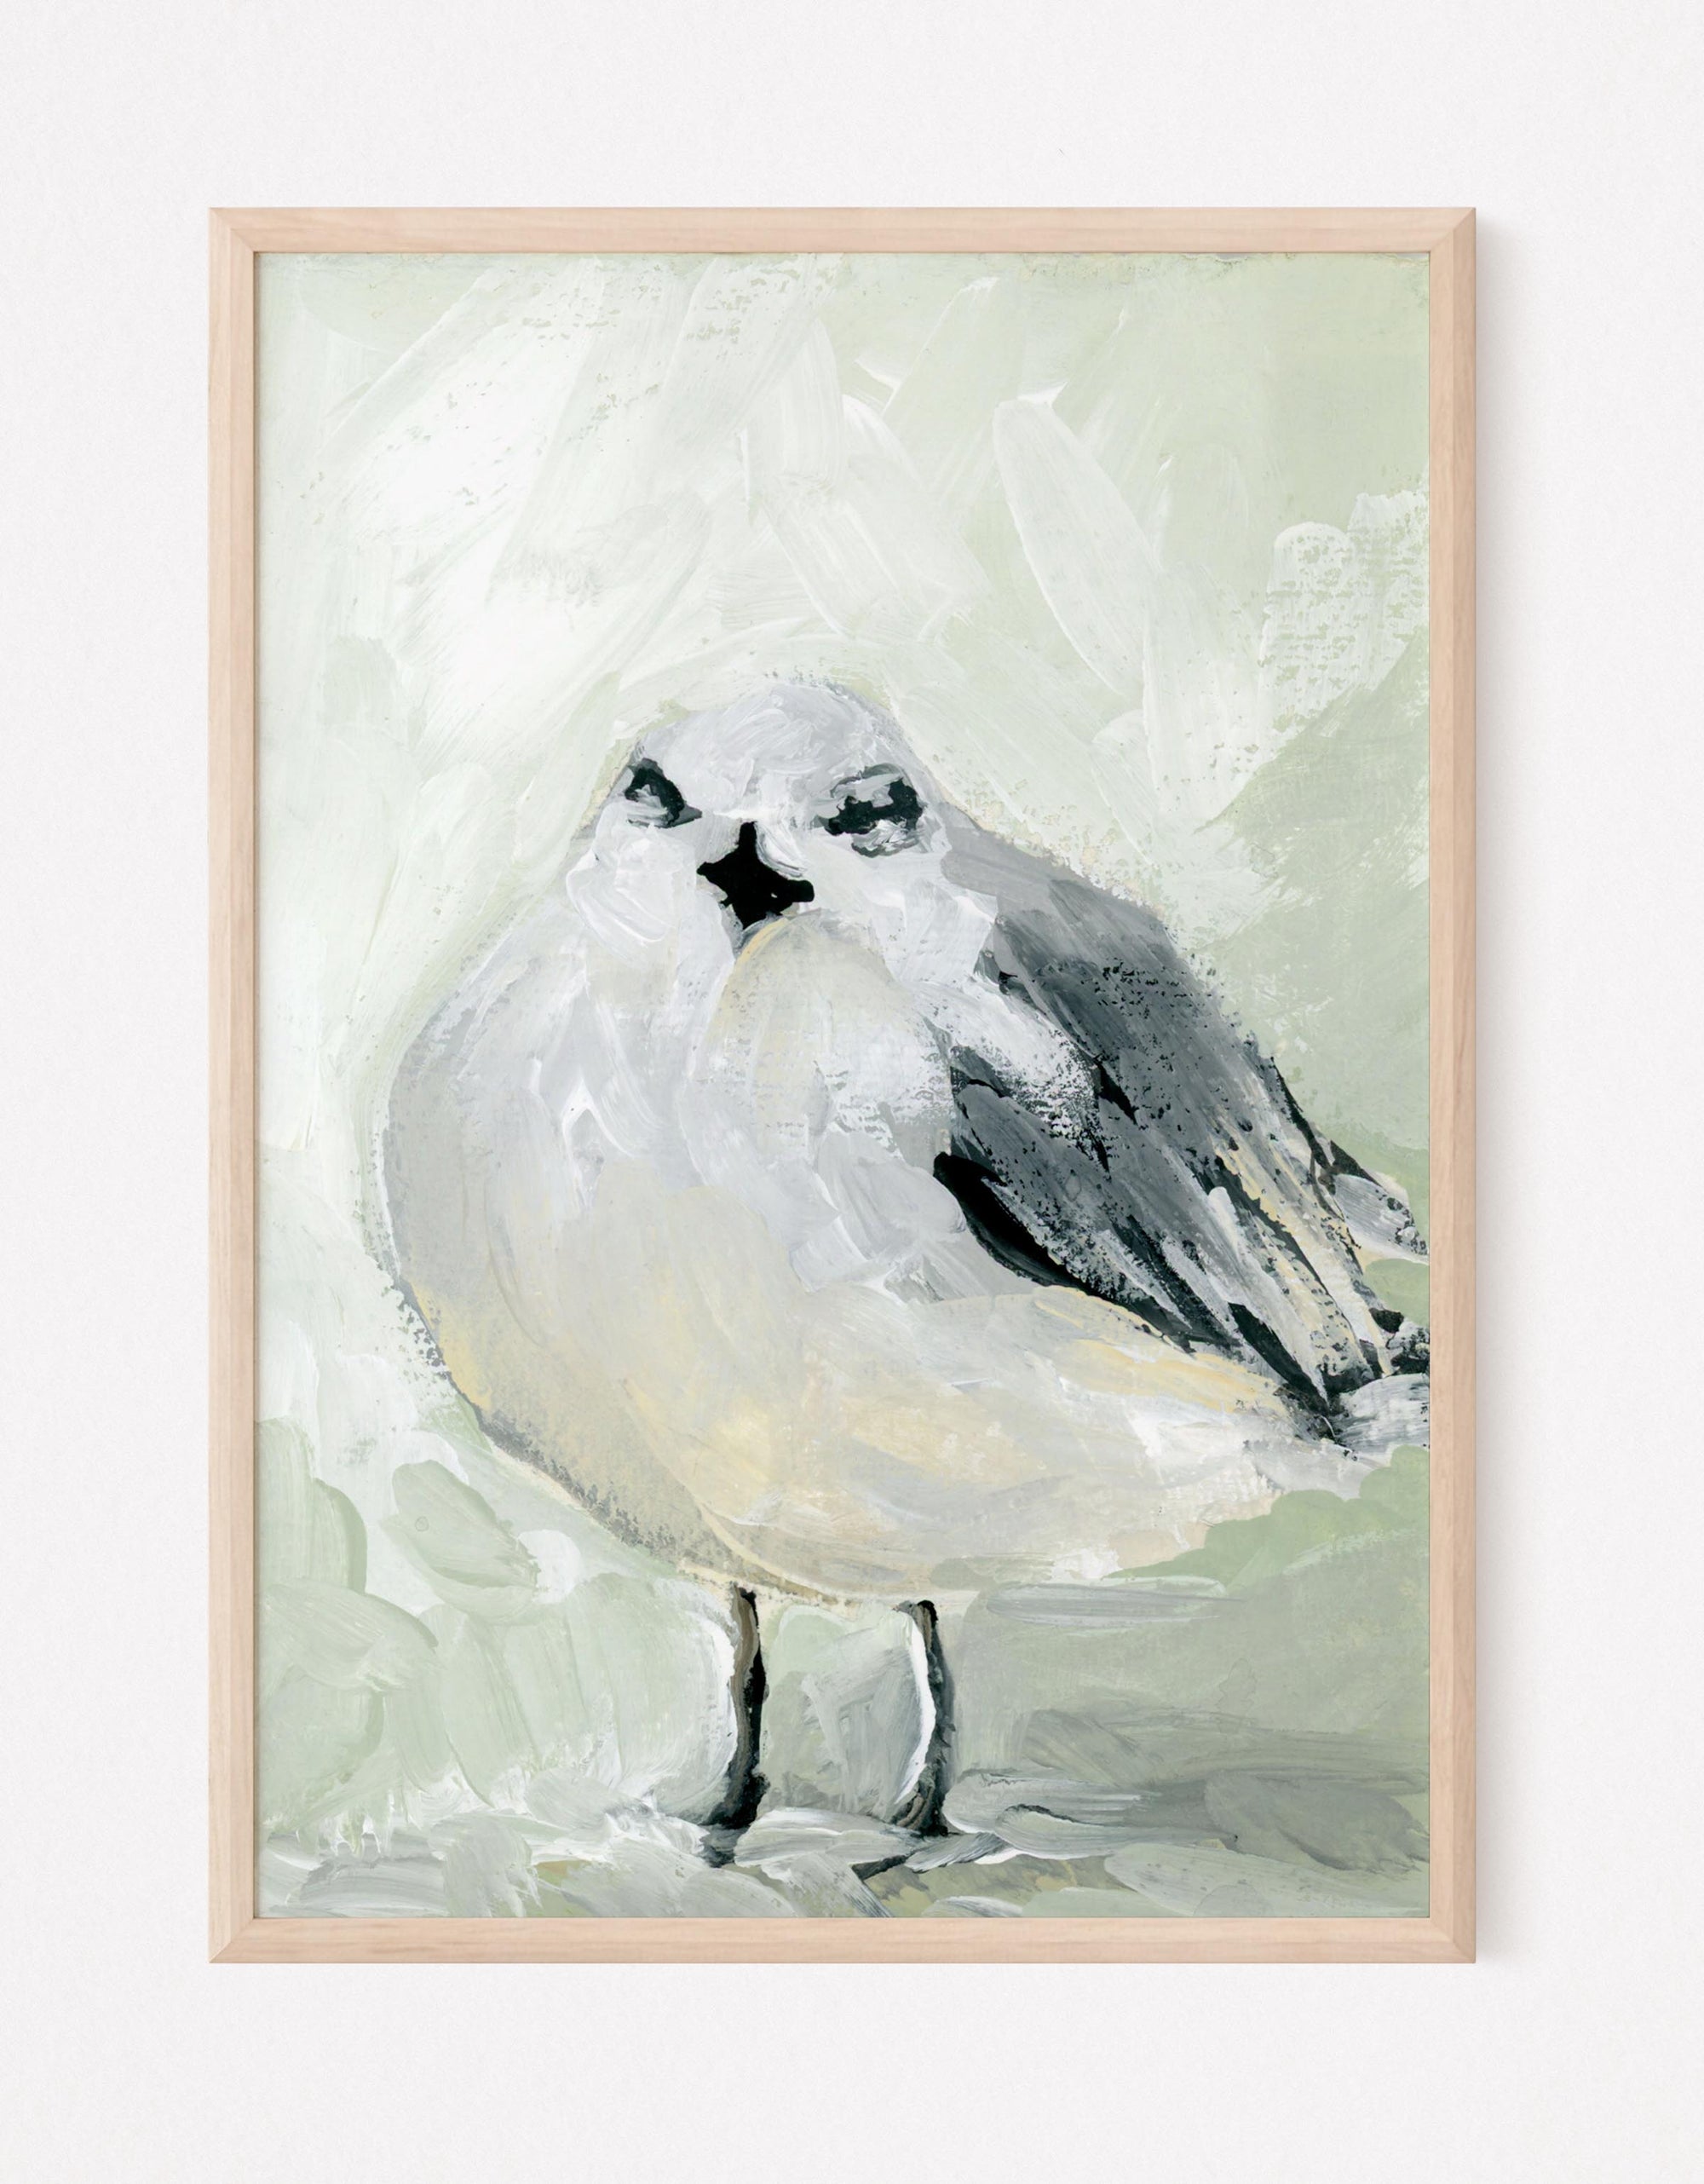 Sally Sue Red, a Seagull Vertical Print